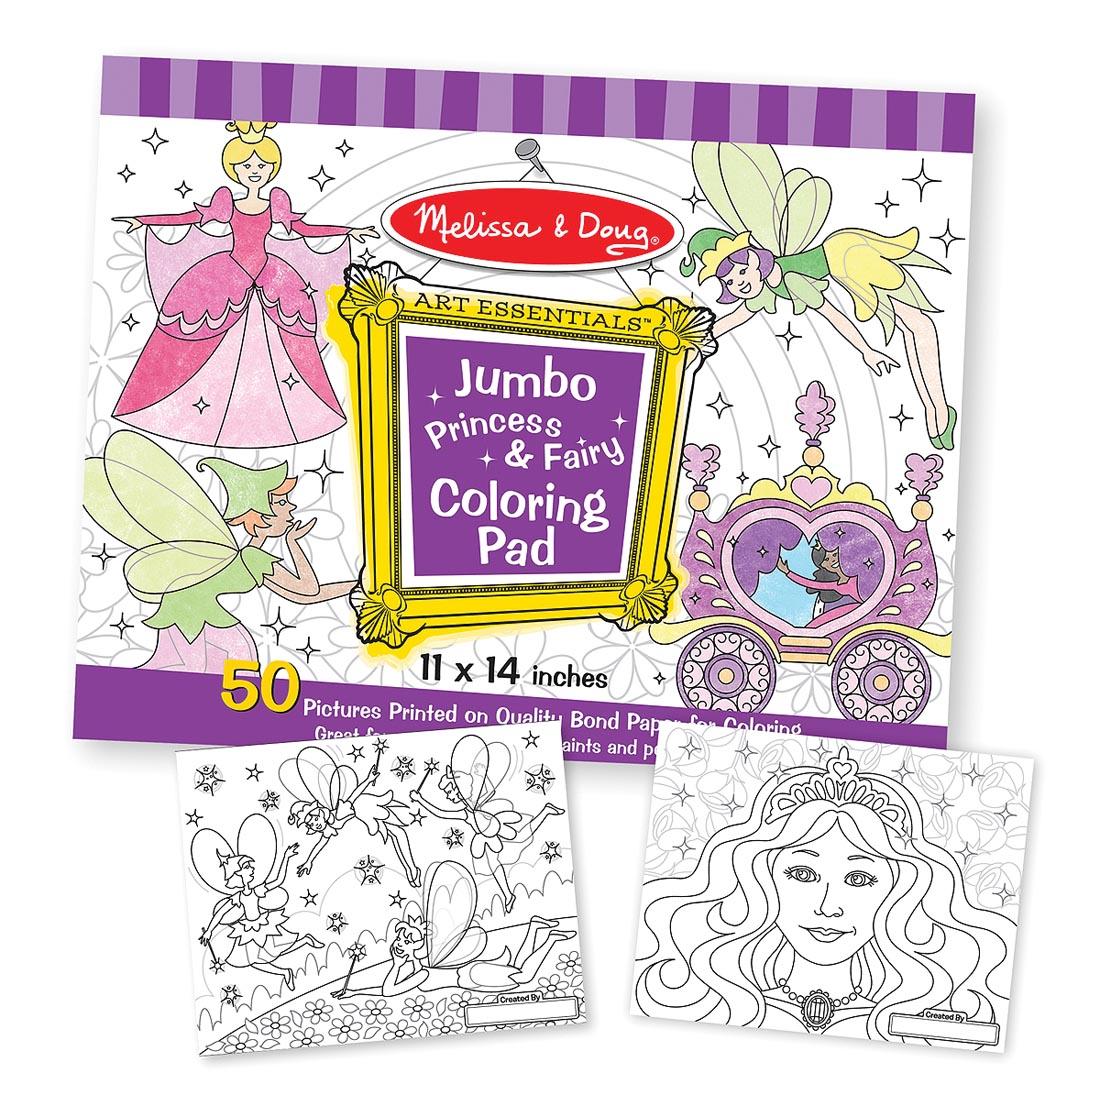 Melissa & Doug Princess & Fairy Jumbo Coloring Pad Ages 3+ 11x14 Inches # 4263